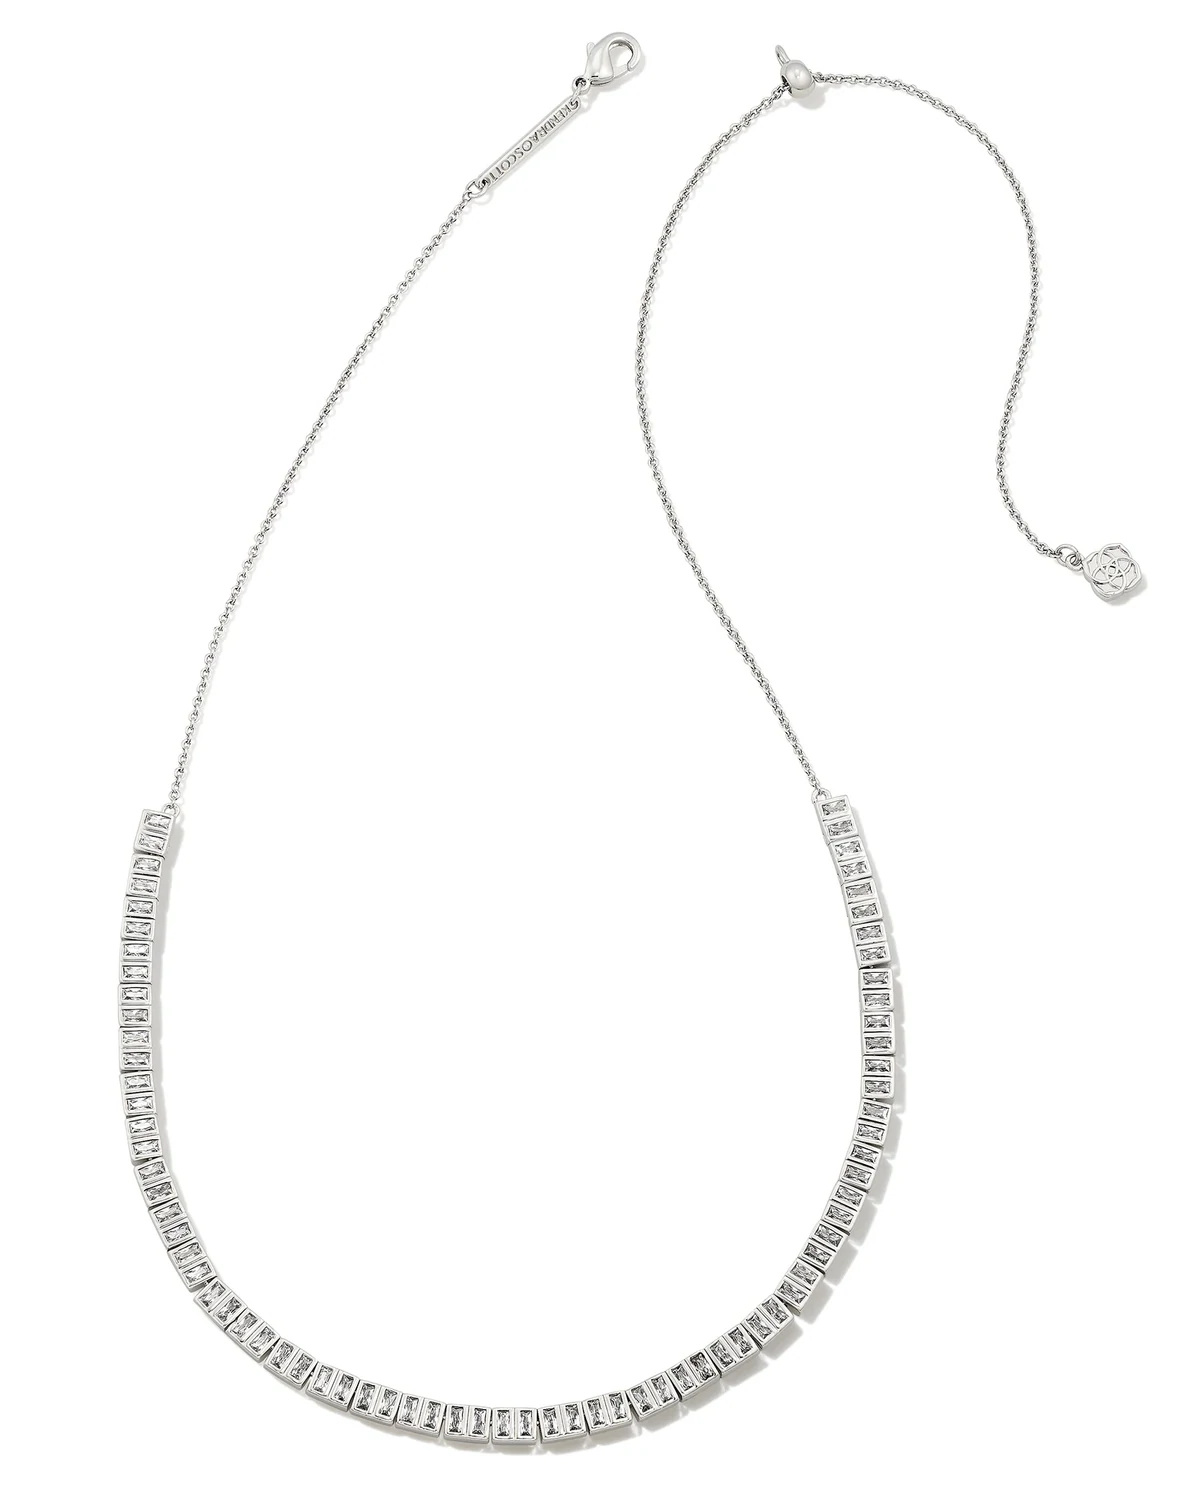 Kendra Scott Gracie Tennis Necklace, Silver